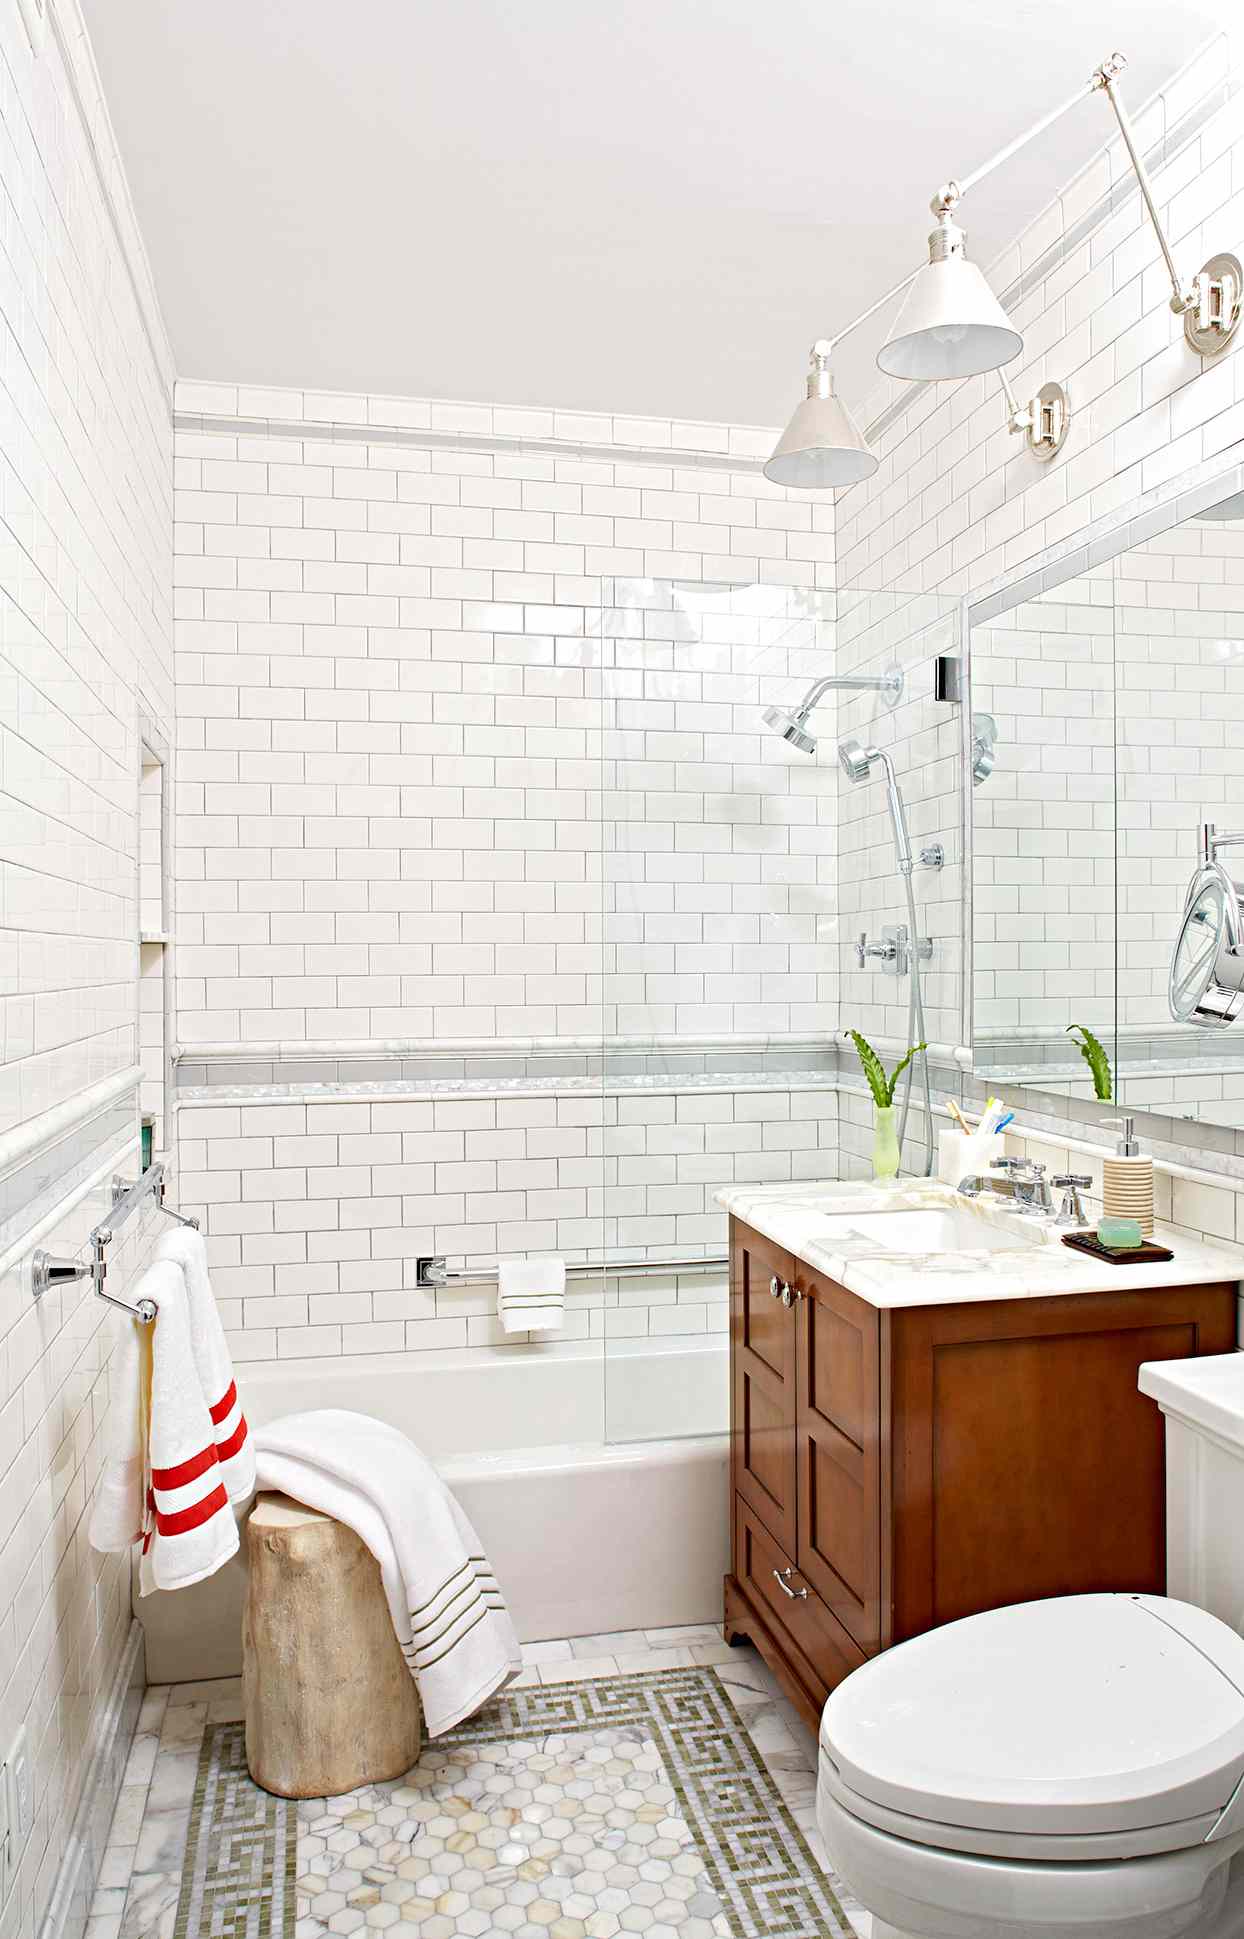 Tile A Shower Enclosure Or Tub Surround, Installing Tub Surround Over Existing Tile